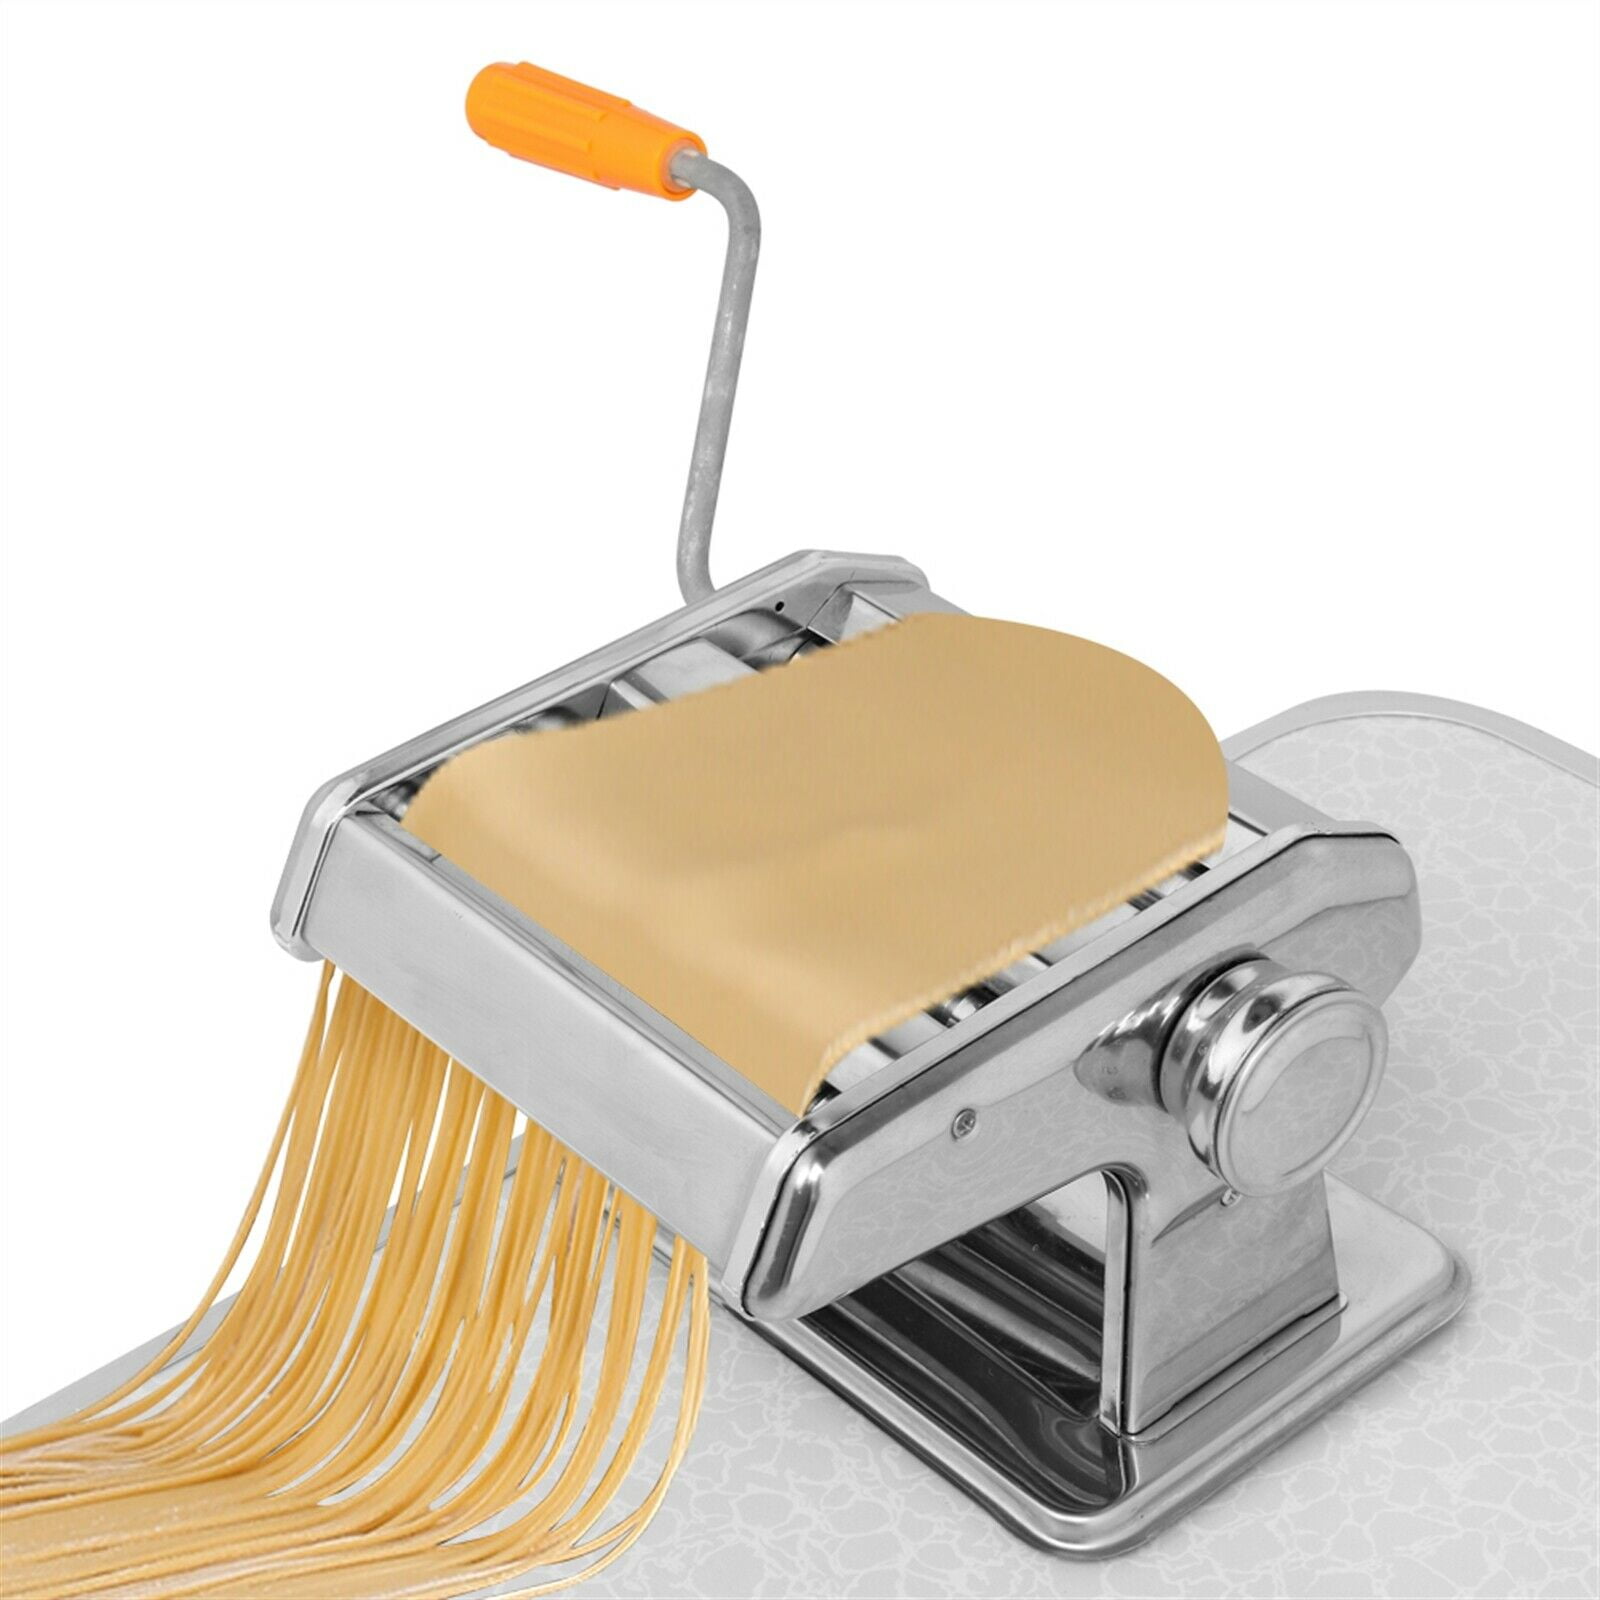  Pasta & Ravioli Maker Set - Roller & 2-Blades Cutter, Sturdy  Stainless Steel Manual Noodle Press Machine for Fresh Fettuccine Spaghetti  Tortilla : Home & Kitchen